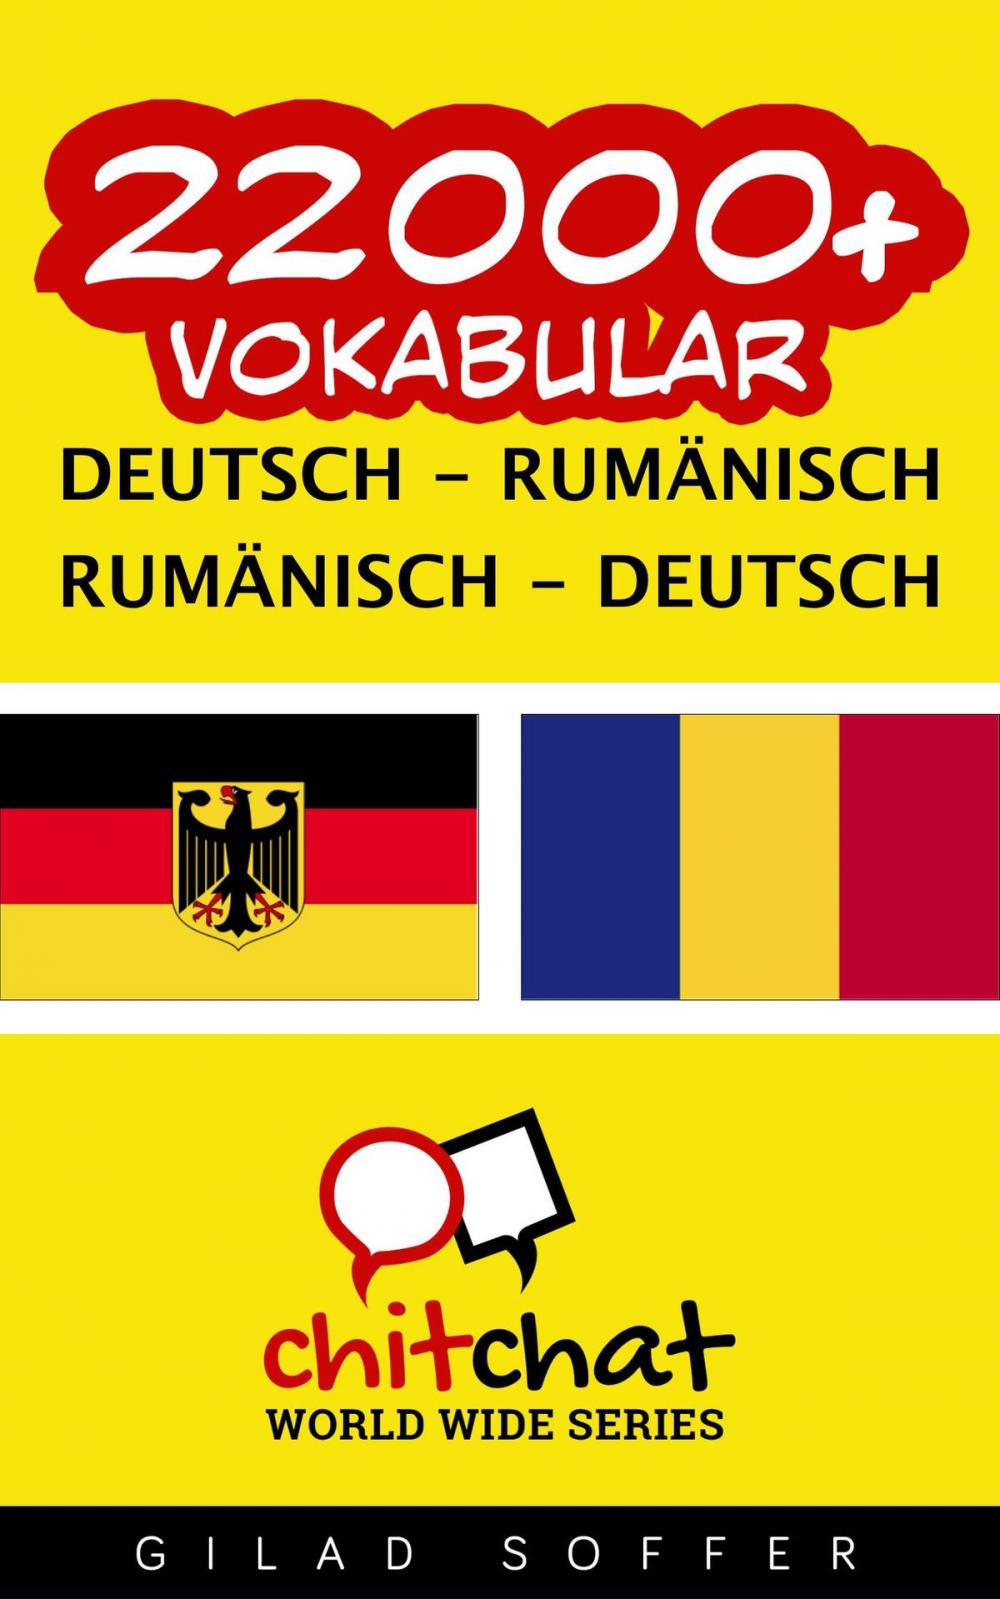 Big bigCover of 22000+ Vokabular Deutsch - Rumänisch